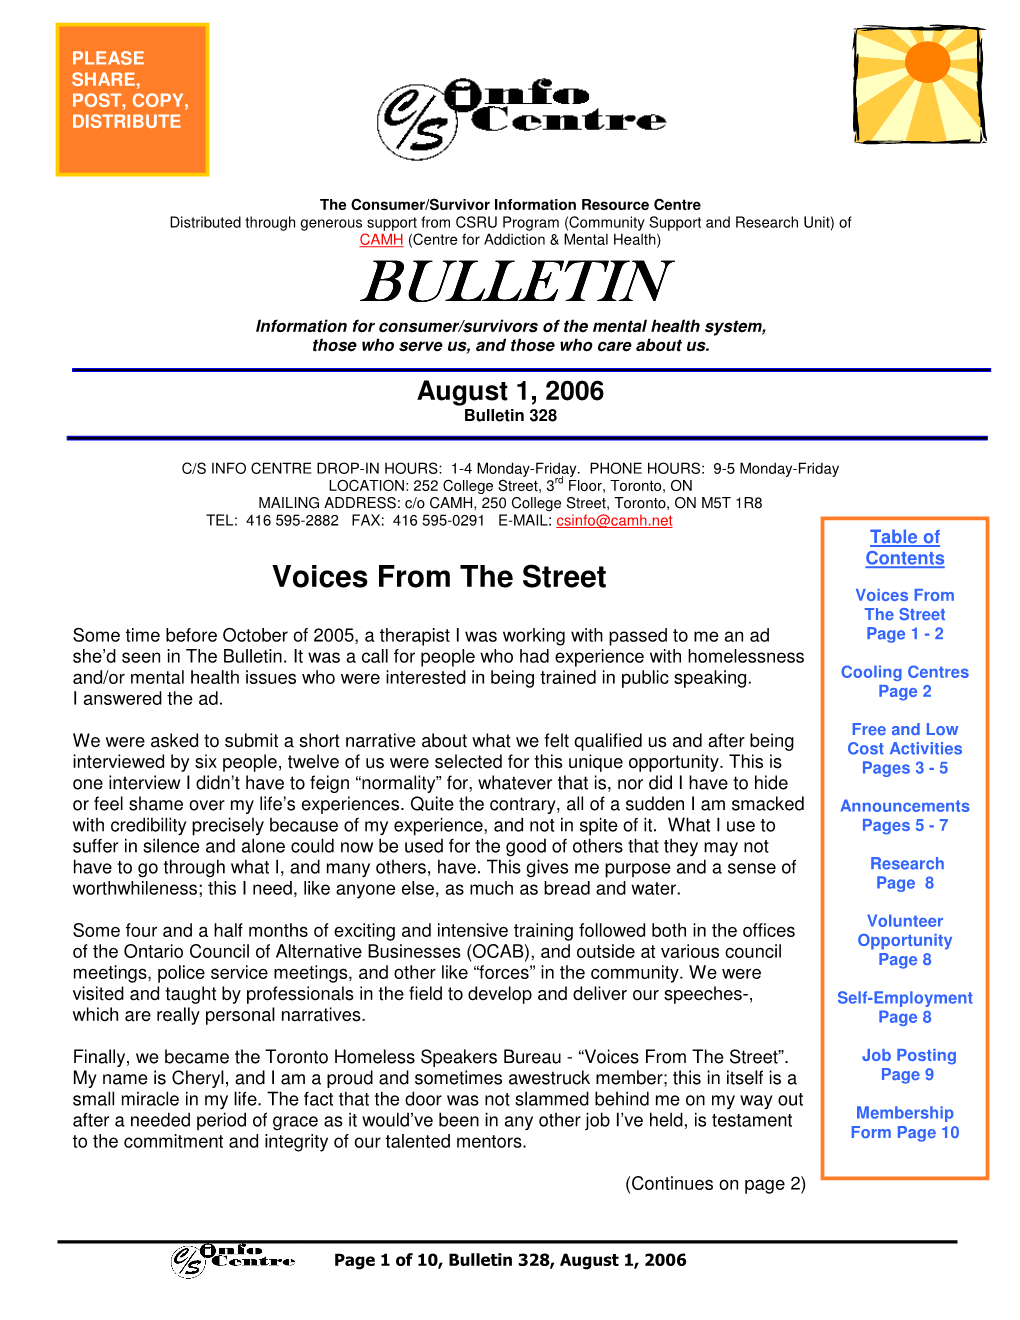 August 1, 2006 Bulletin 328